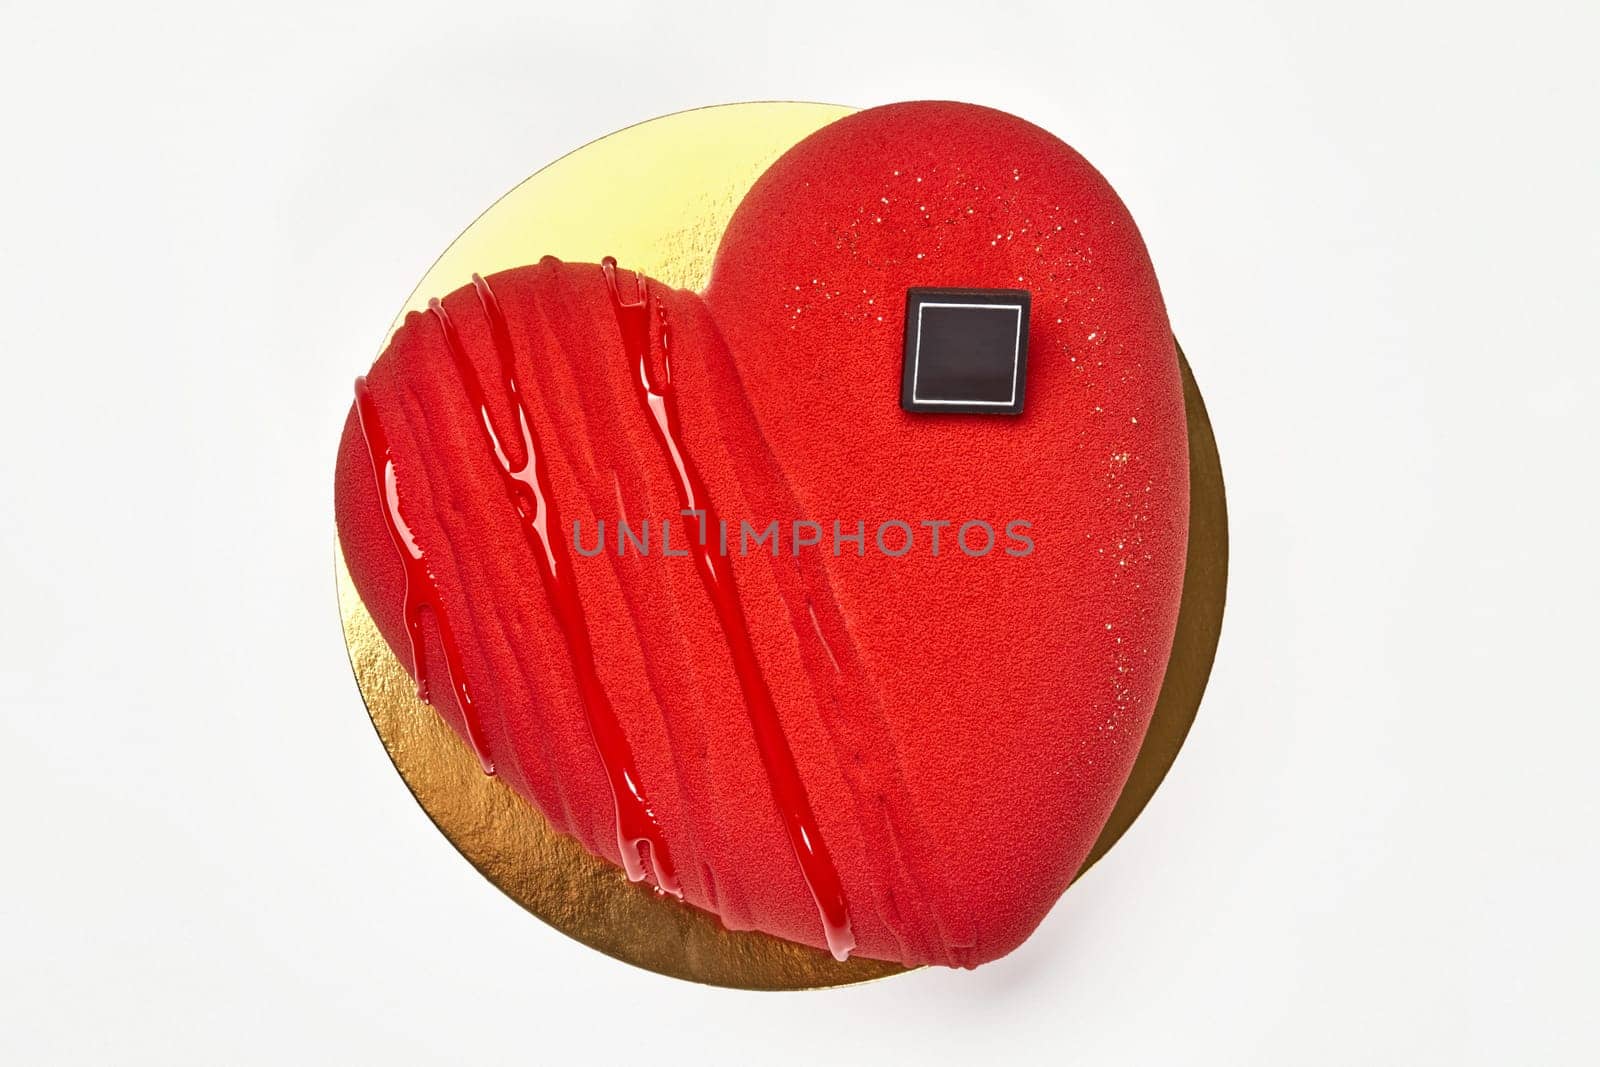 Velvety red heart-shaped mousse cake on gold cardboard by nazarovsergey